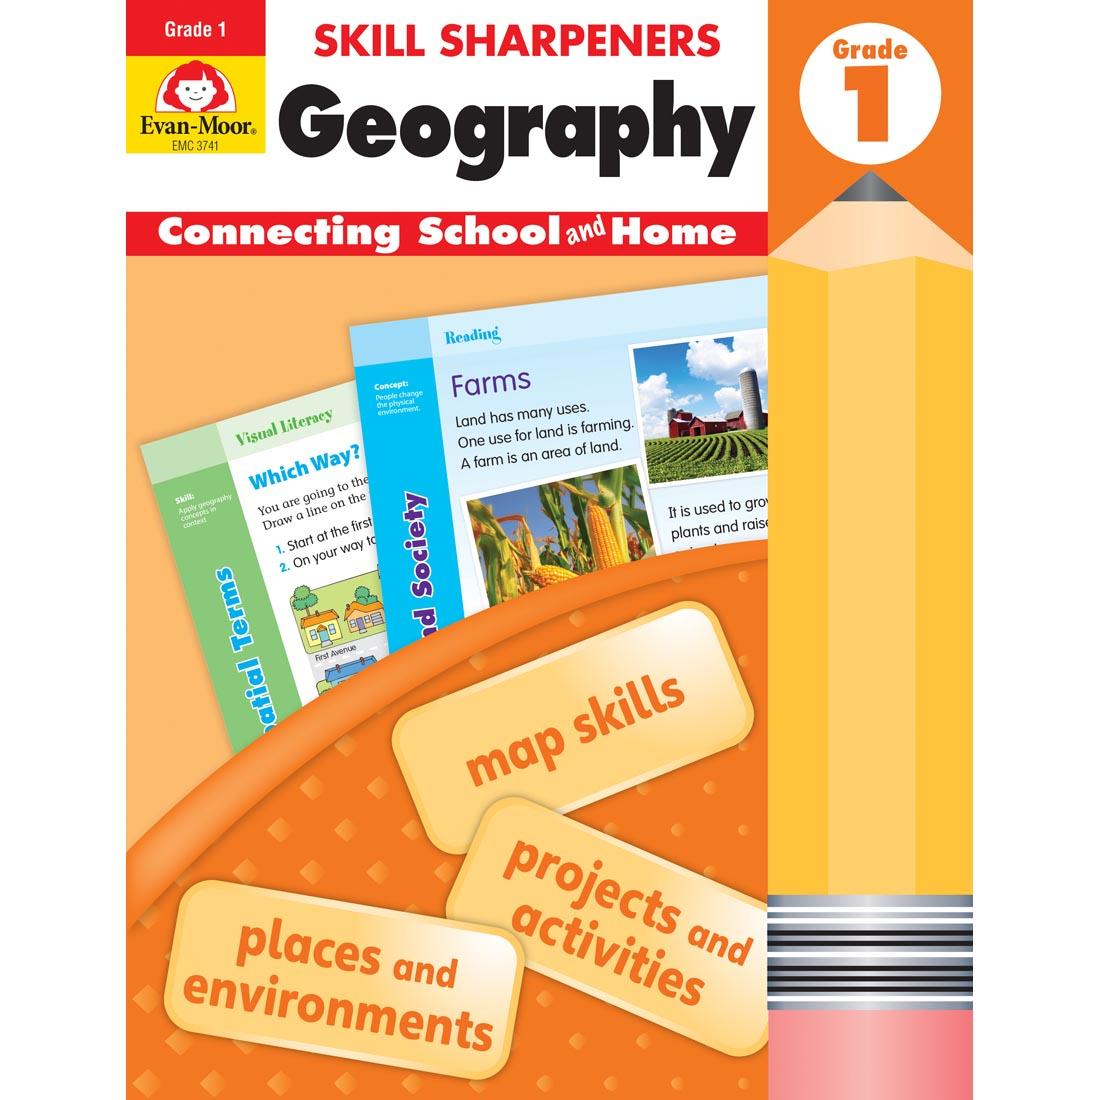 Evan-Moor Skill Sharpeners Geography Grade 1